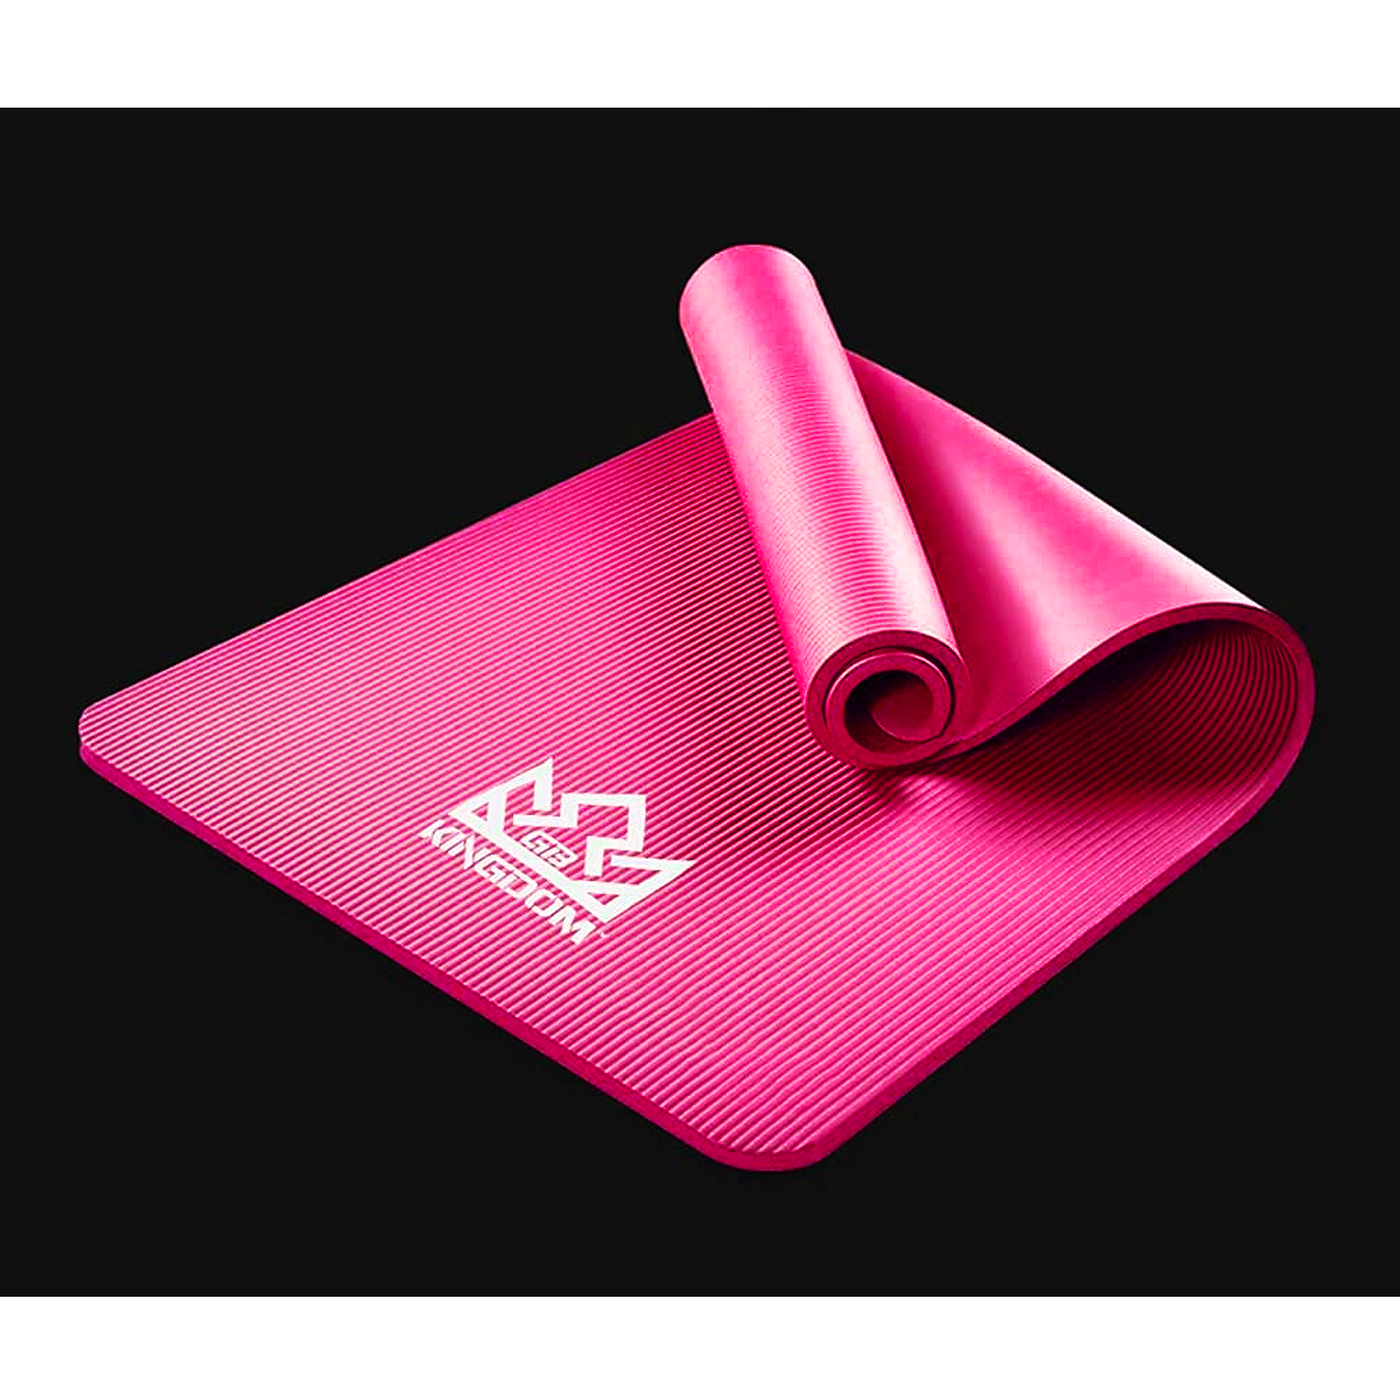 Pink 15MM NBR YOGA MAT, Thick yoga Mat size 15mm x 60cm x 190cm